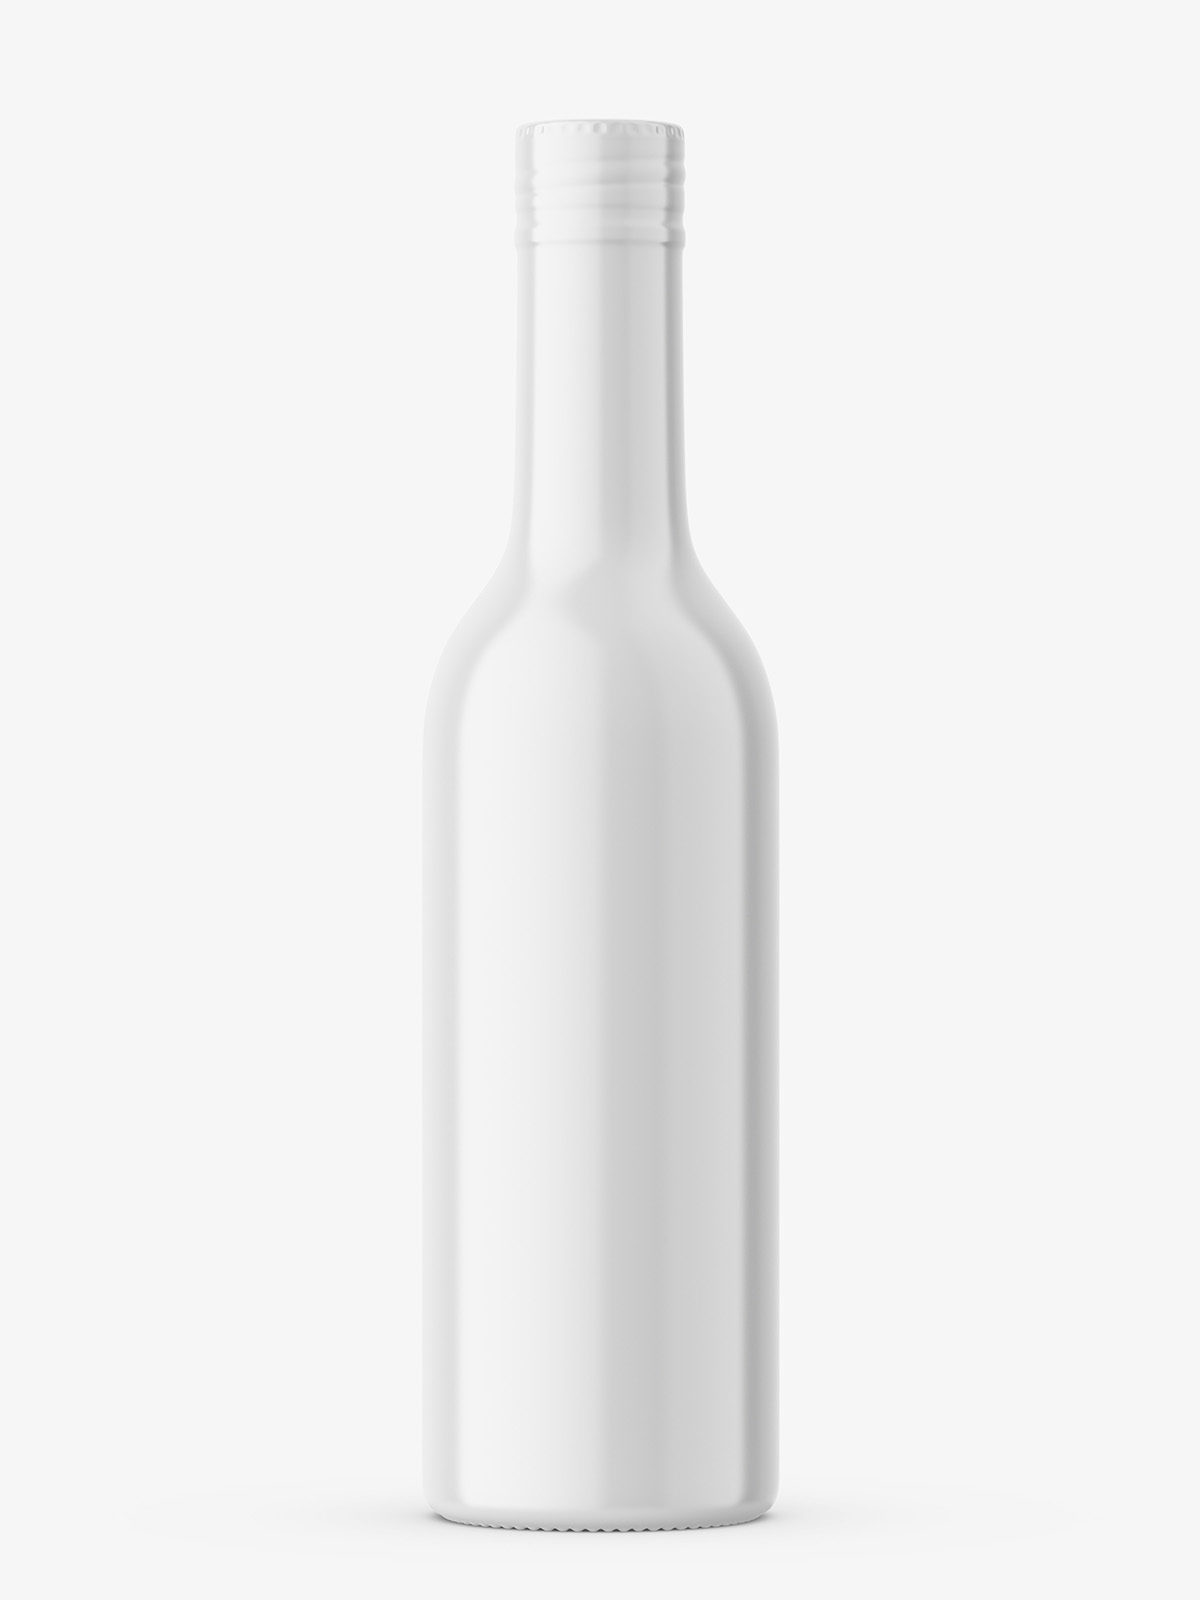 Download Liquor Bottle Free Mockup : 750ml Glass Liquor Bottle Mockup Packaging Mockups - Layered psd ...